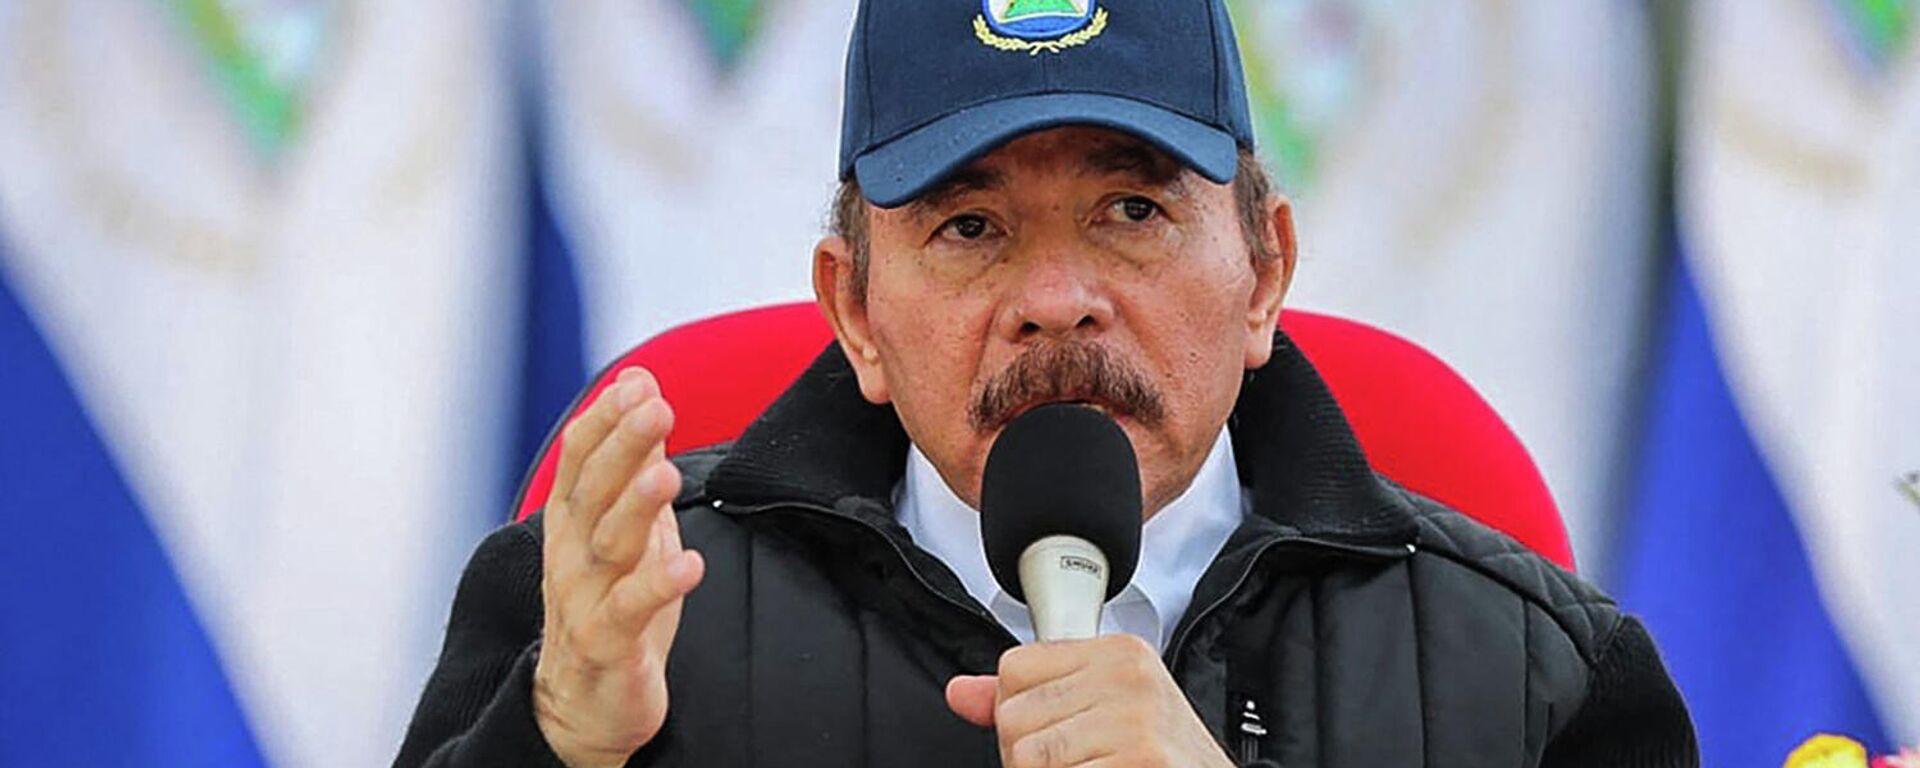 Daniel Ortega, presidente de Nicaragua - Sputnik Mundo, 1920, 25.06.2021